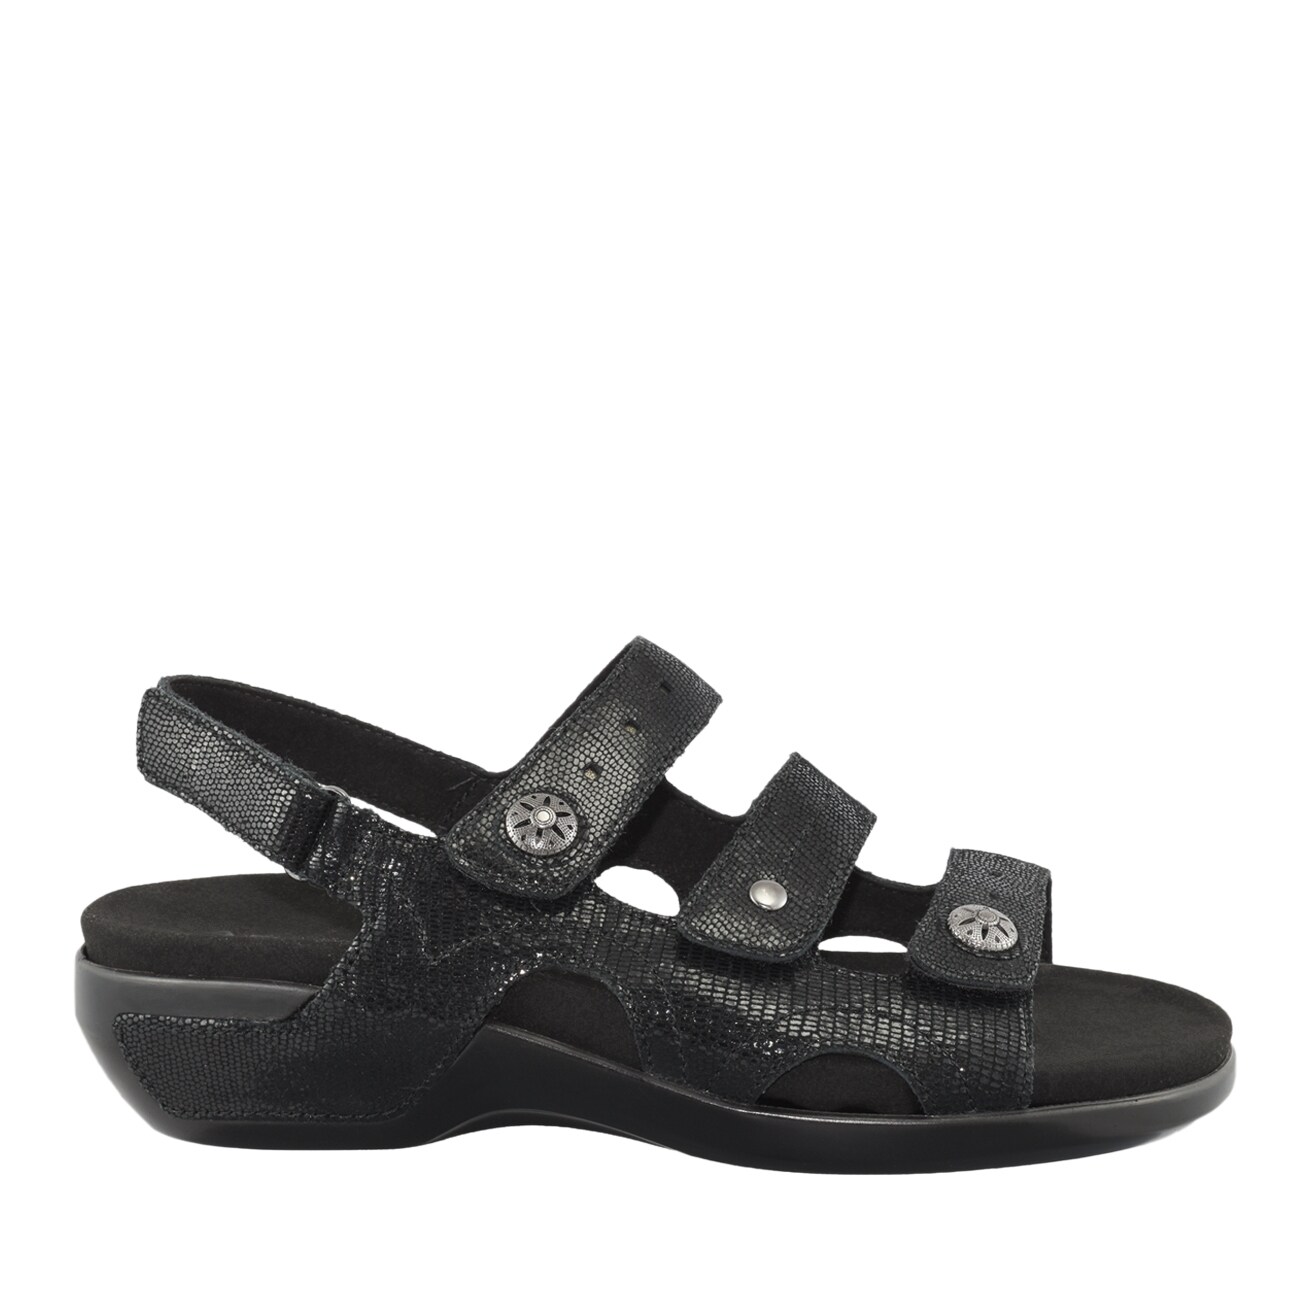 ARAVON Power Comfort Sandal - Medium Width | The Shoe Company